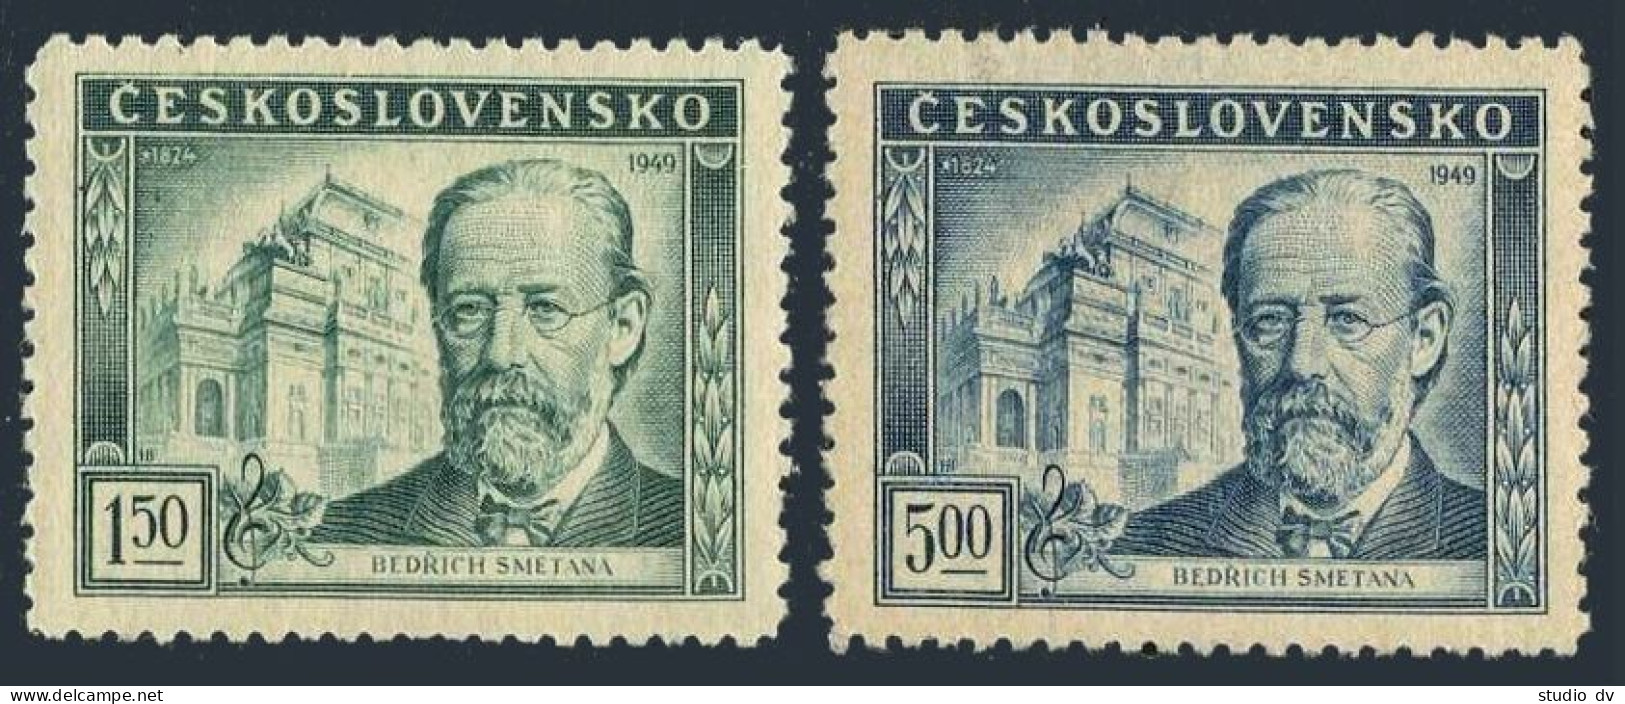 Czechoslovakia 386-387, MNH. Michel 578-579. Bedrich Smetana, Composer, 1949. - Unused Stamps